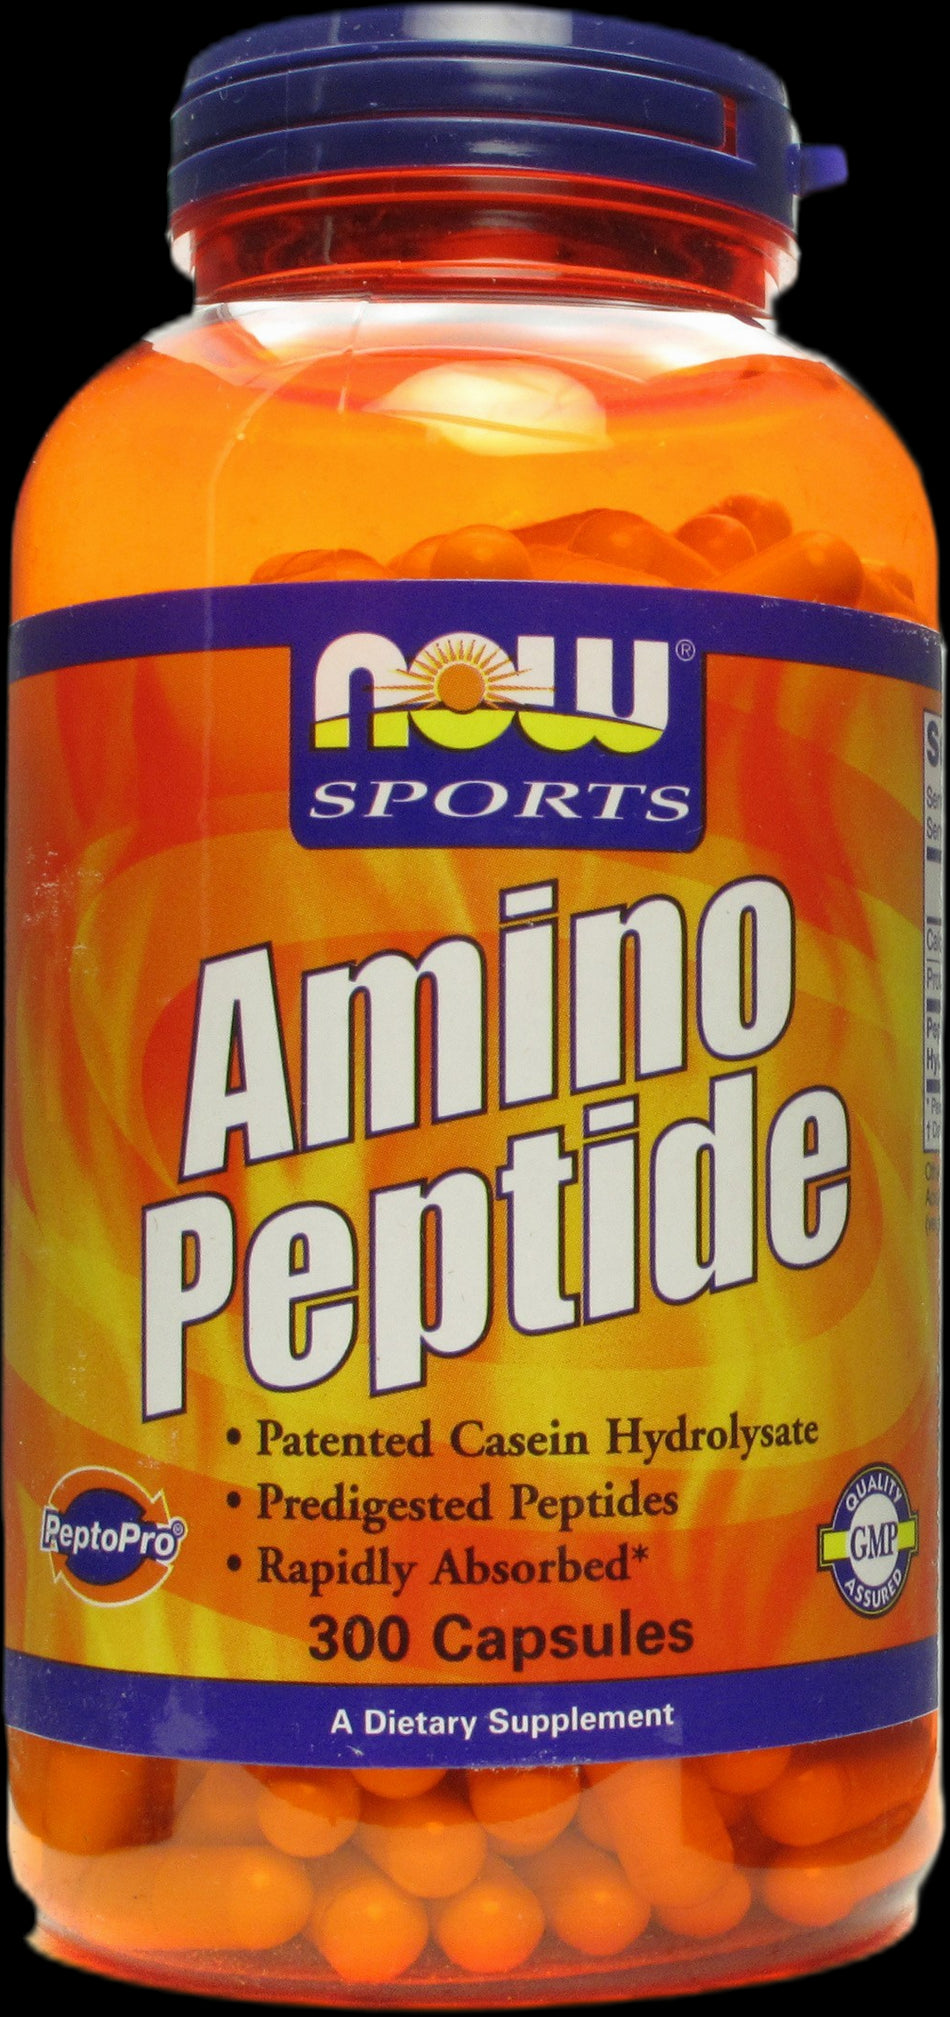 Amino Peptide - BadiZdrav.BG